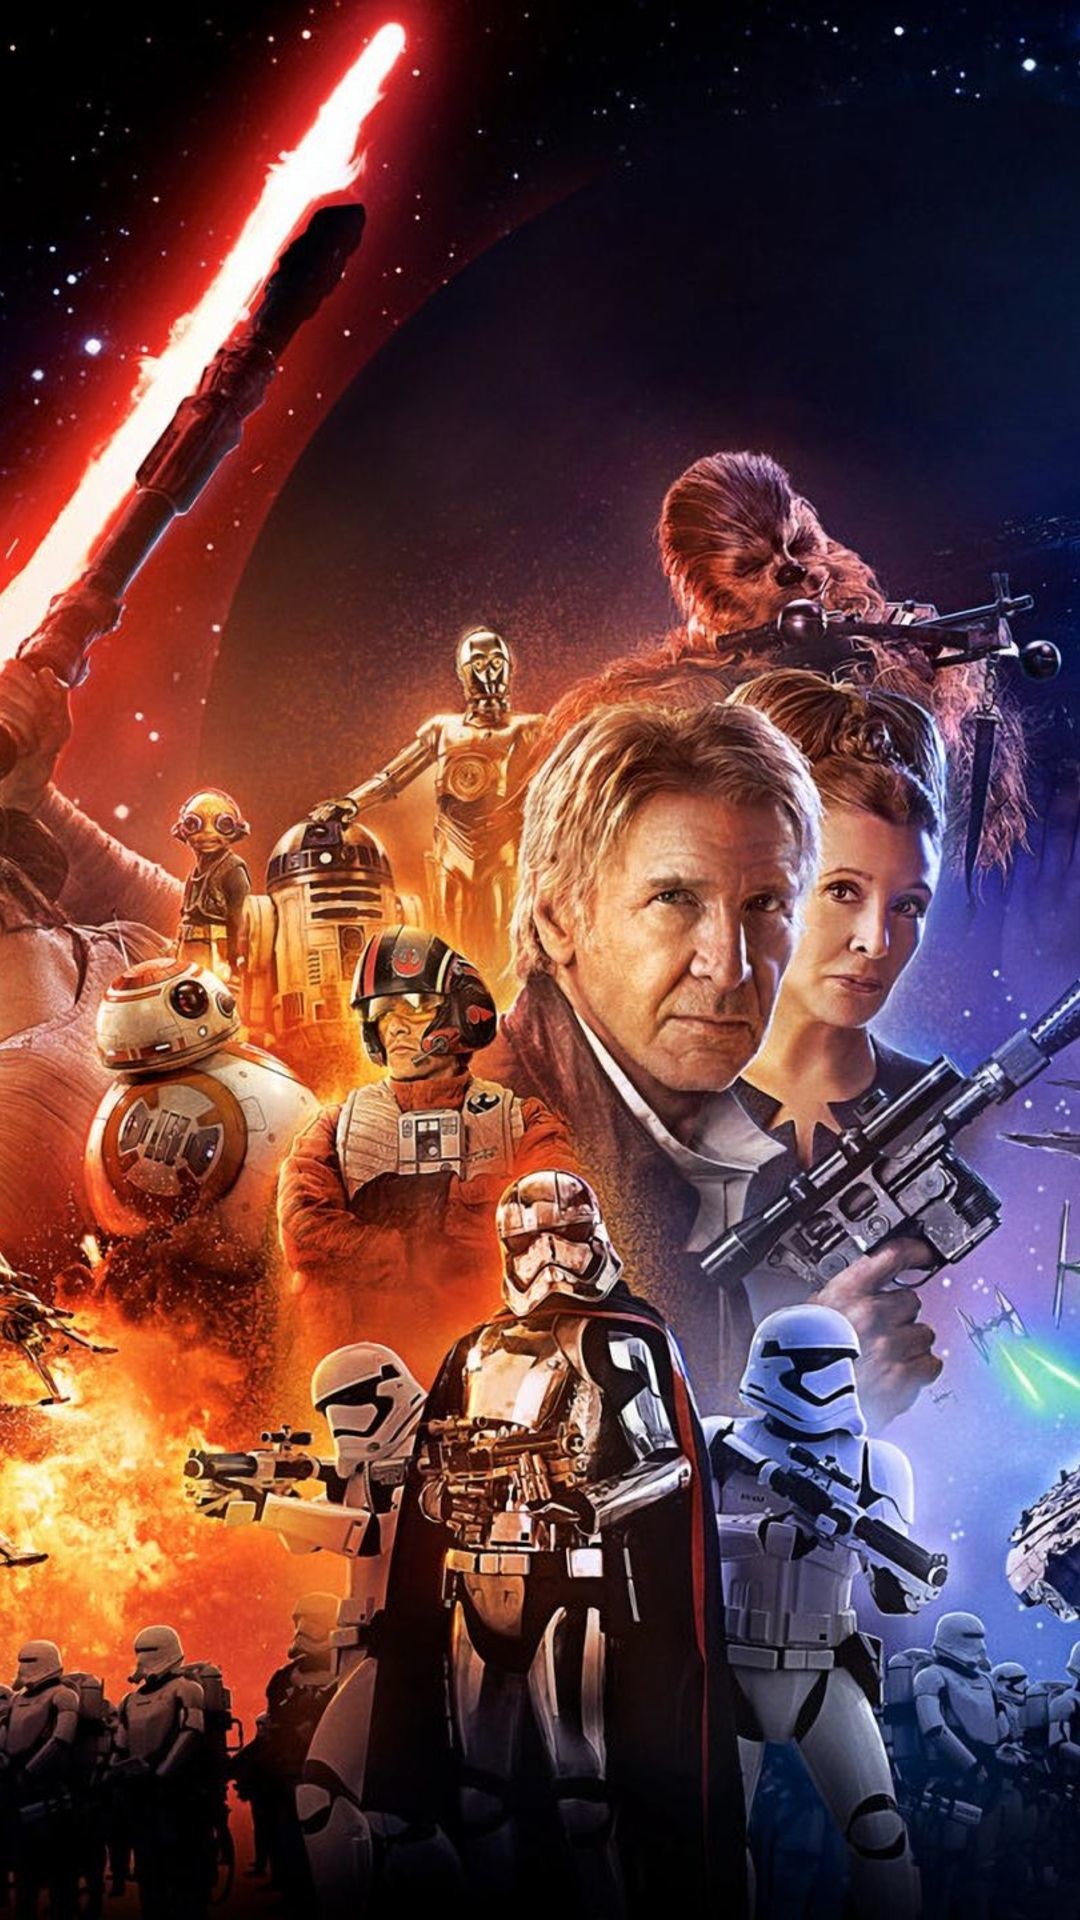 1080x1920 Star Wars The Force Awakens Wallpaper iDownloadBlog Movie Poster Mod.  Download: iPhone. Star ...